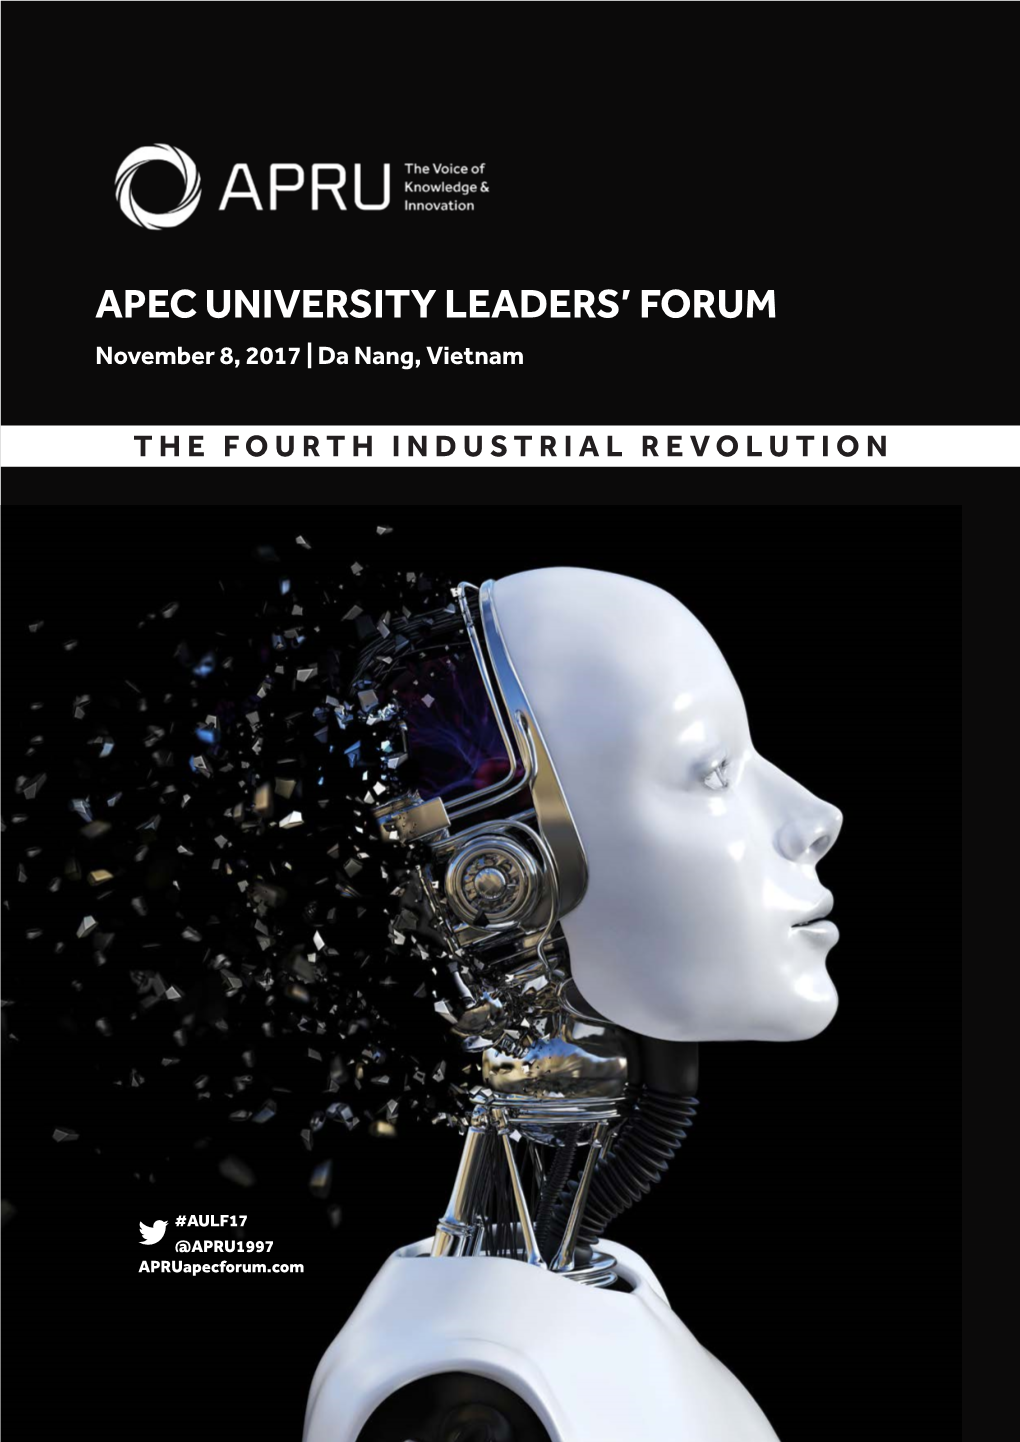 Apec University Leaders' Forum